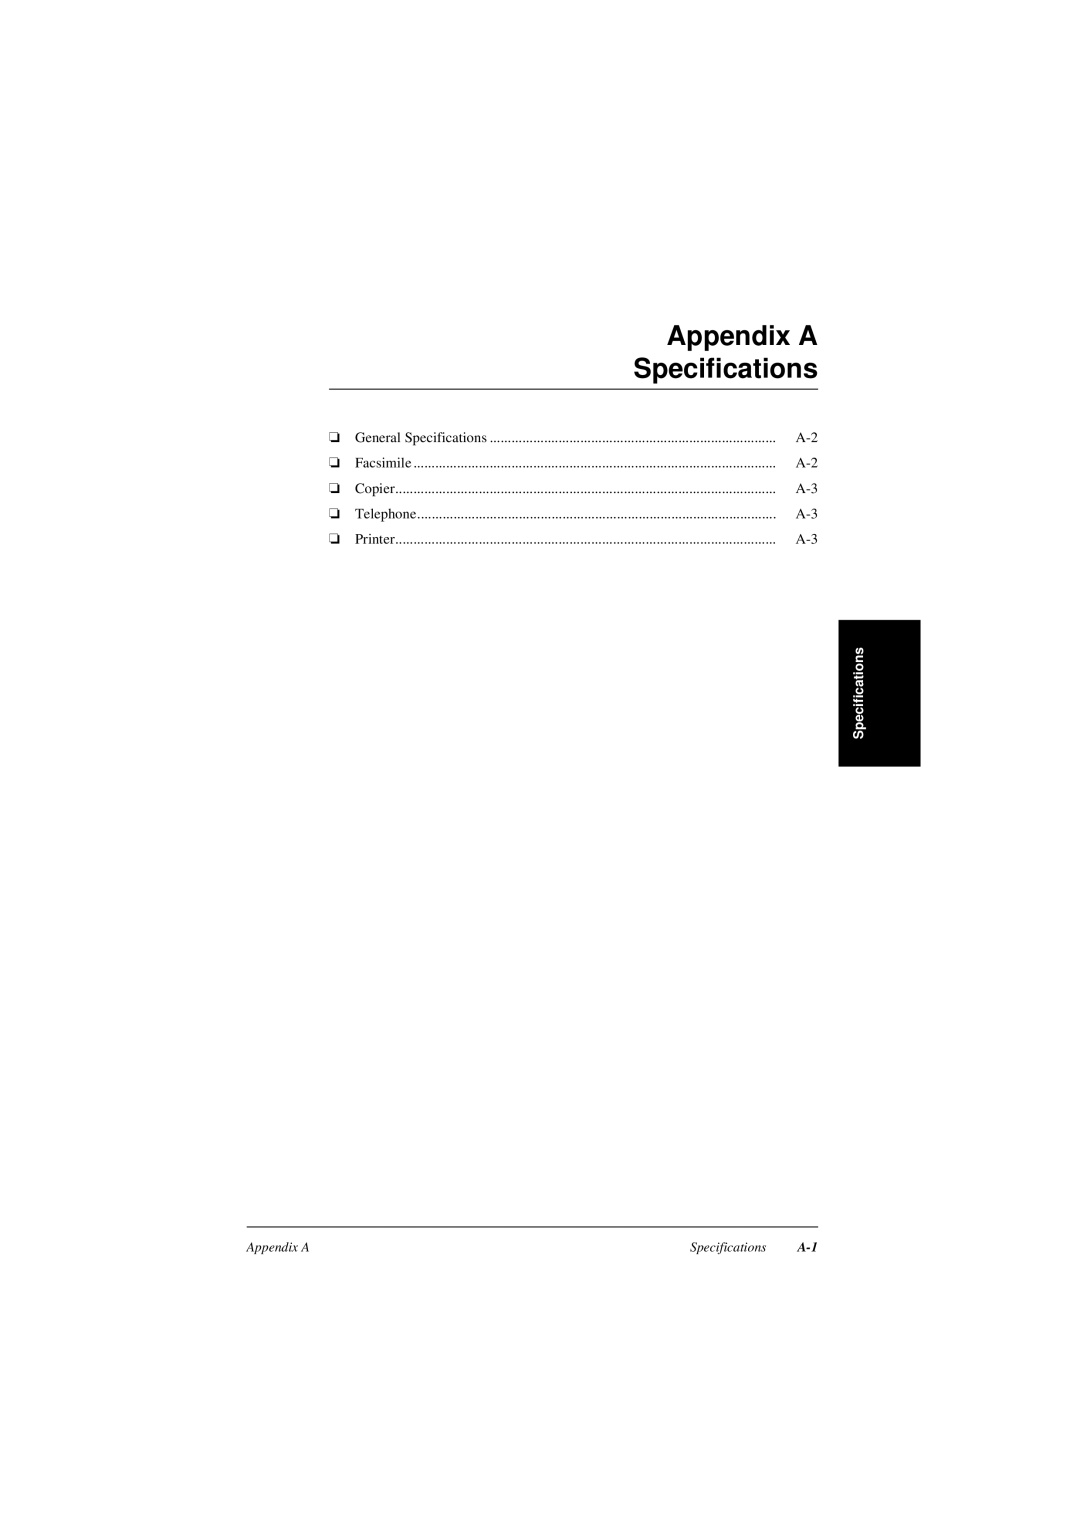 Canon L240, L290 manual Appendix A, Specifications, Facsimile, Copier, Telephone, Printer 